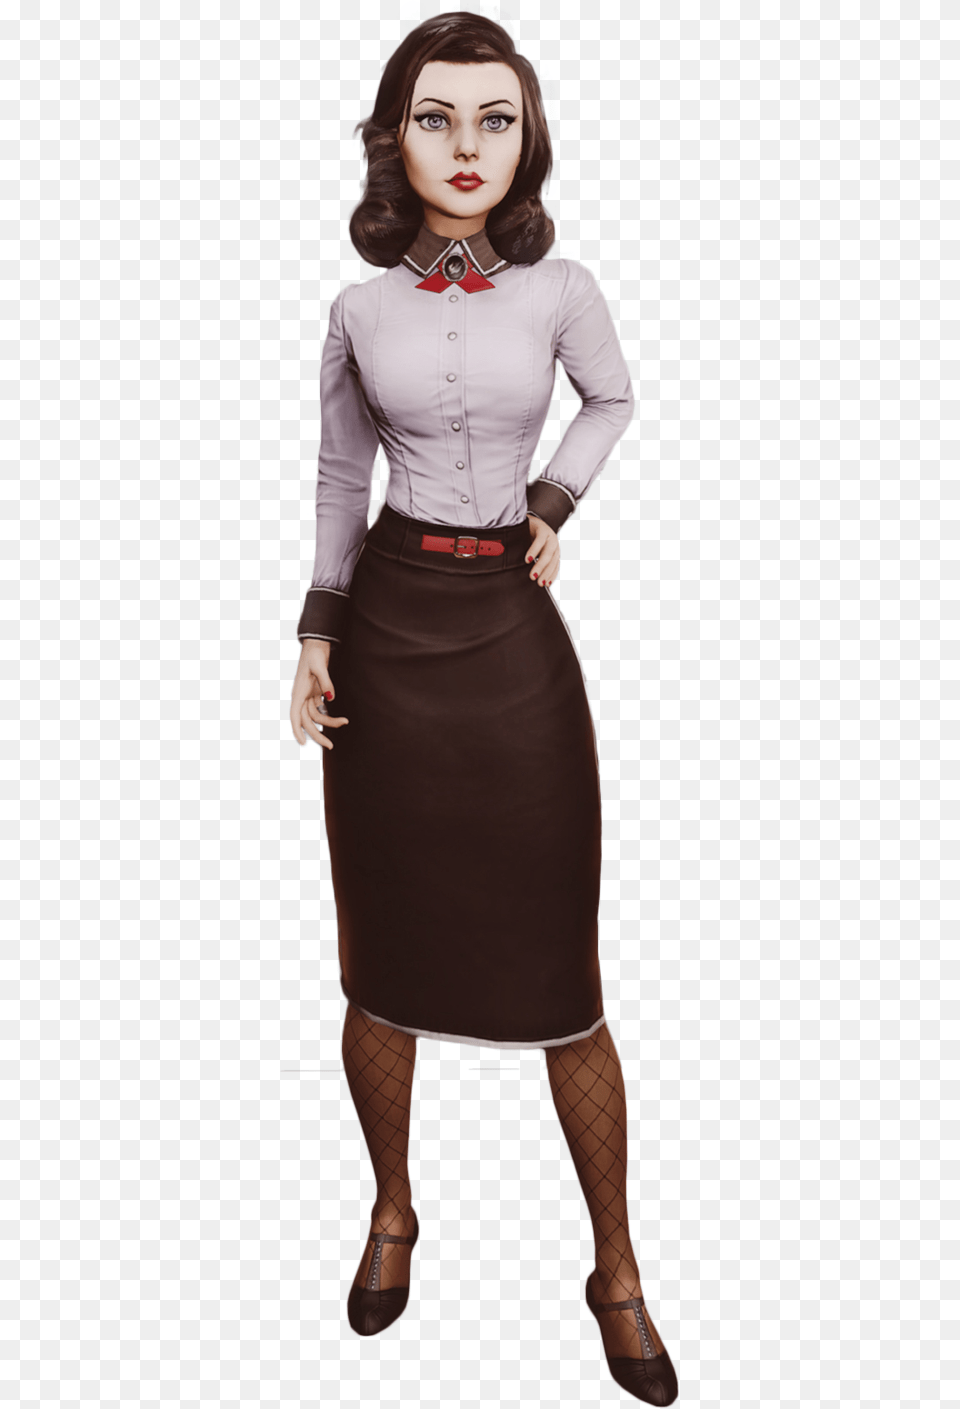 Bioshock Infinite Bioshock Elizabeth Cosplay Outfit, Blouse, Clothing, Sleeve, Skirt Png Image